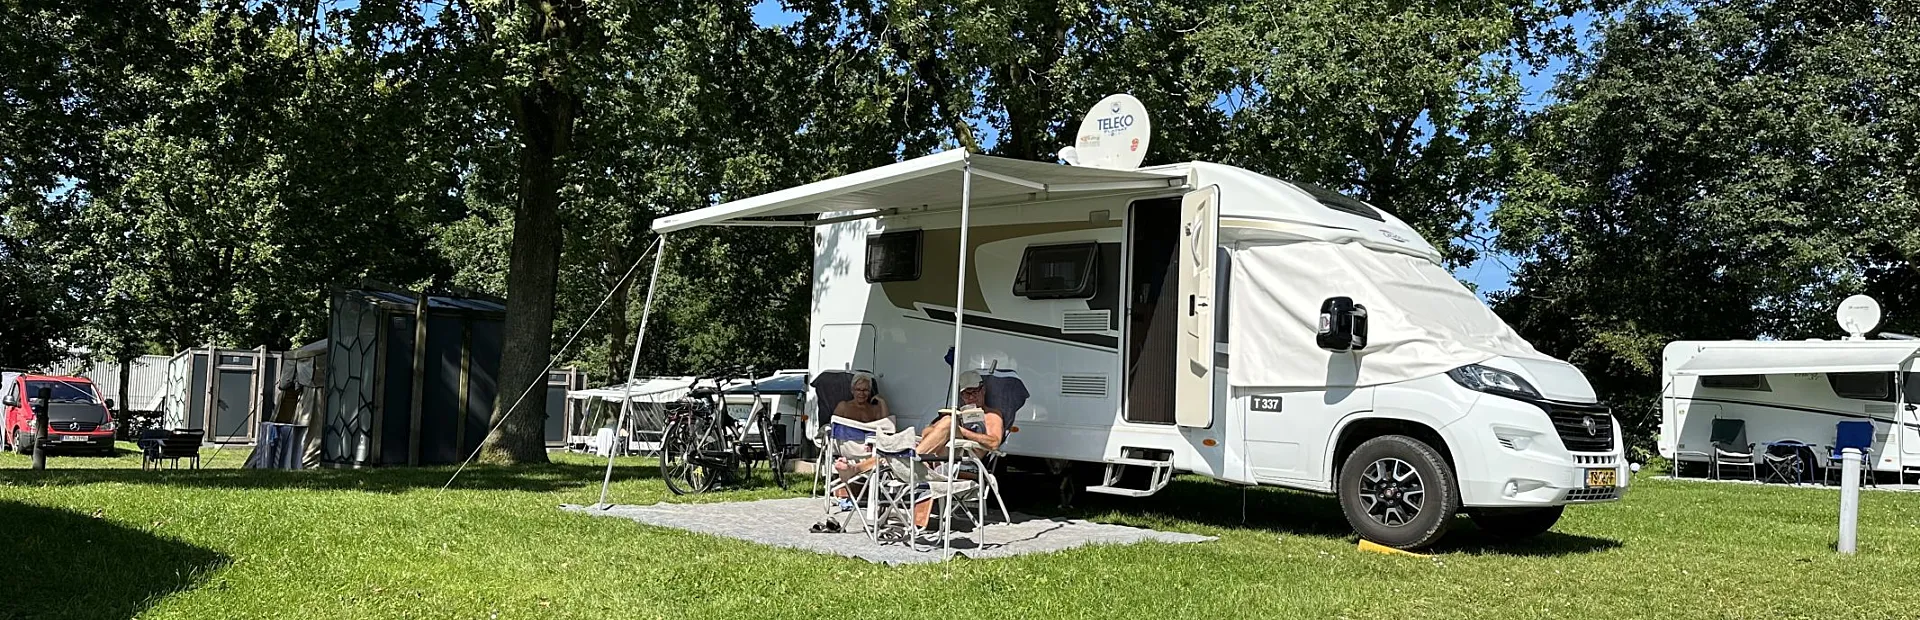 Naturist camping Netherlands motorhome site paved 7